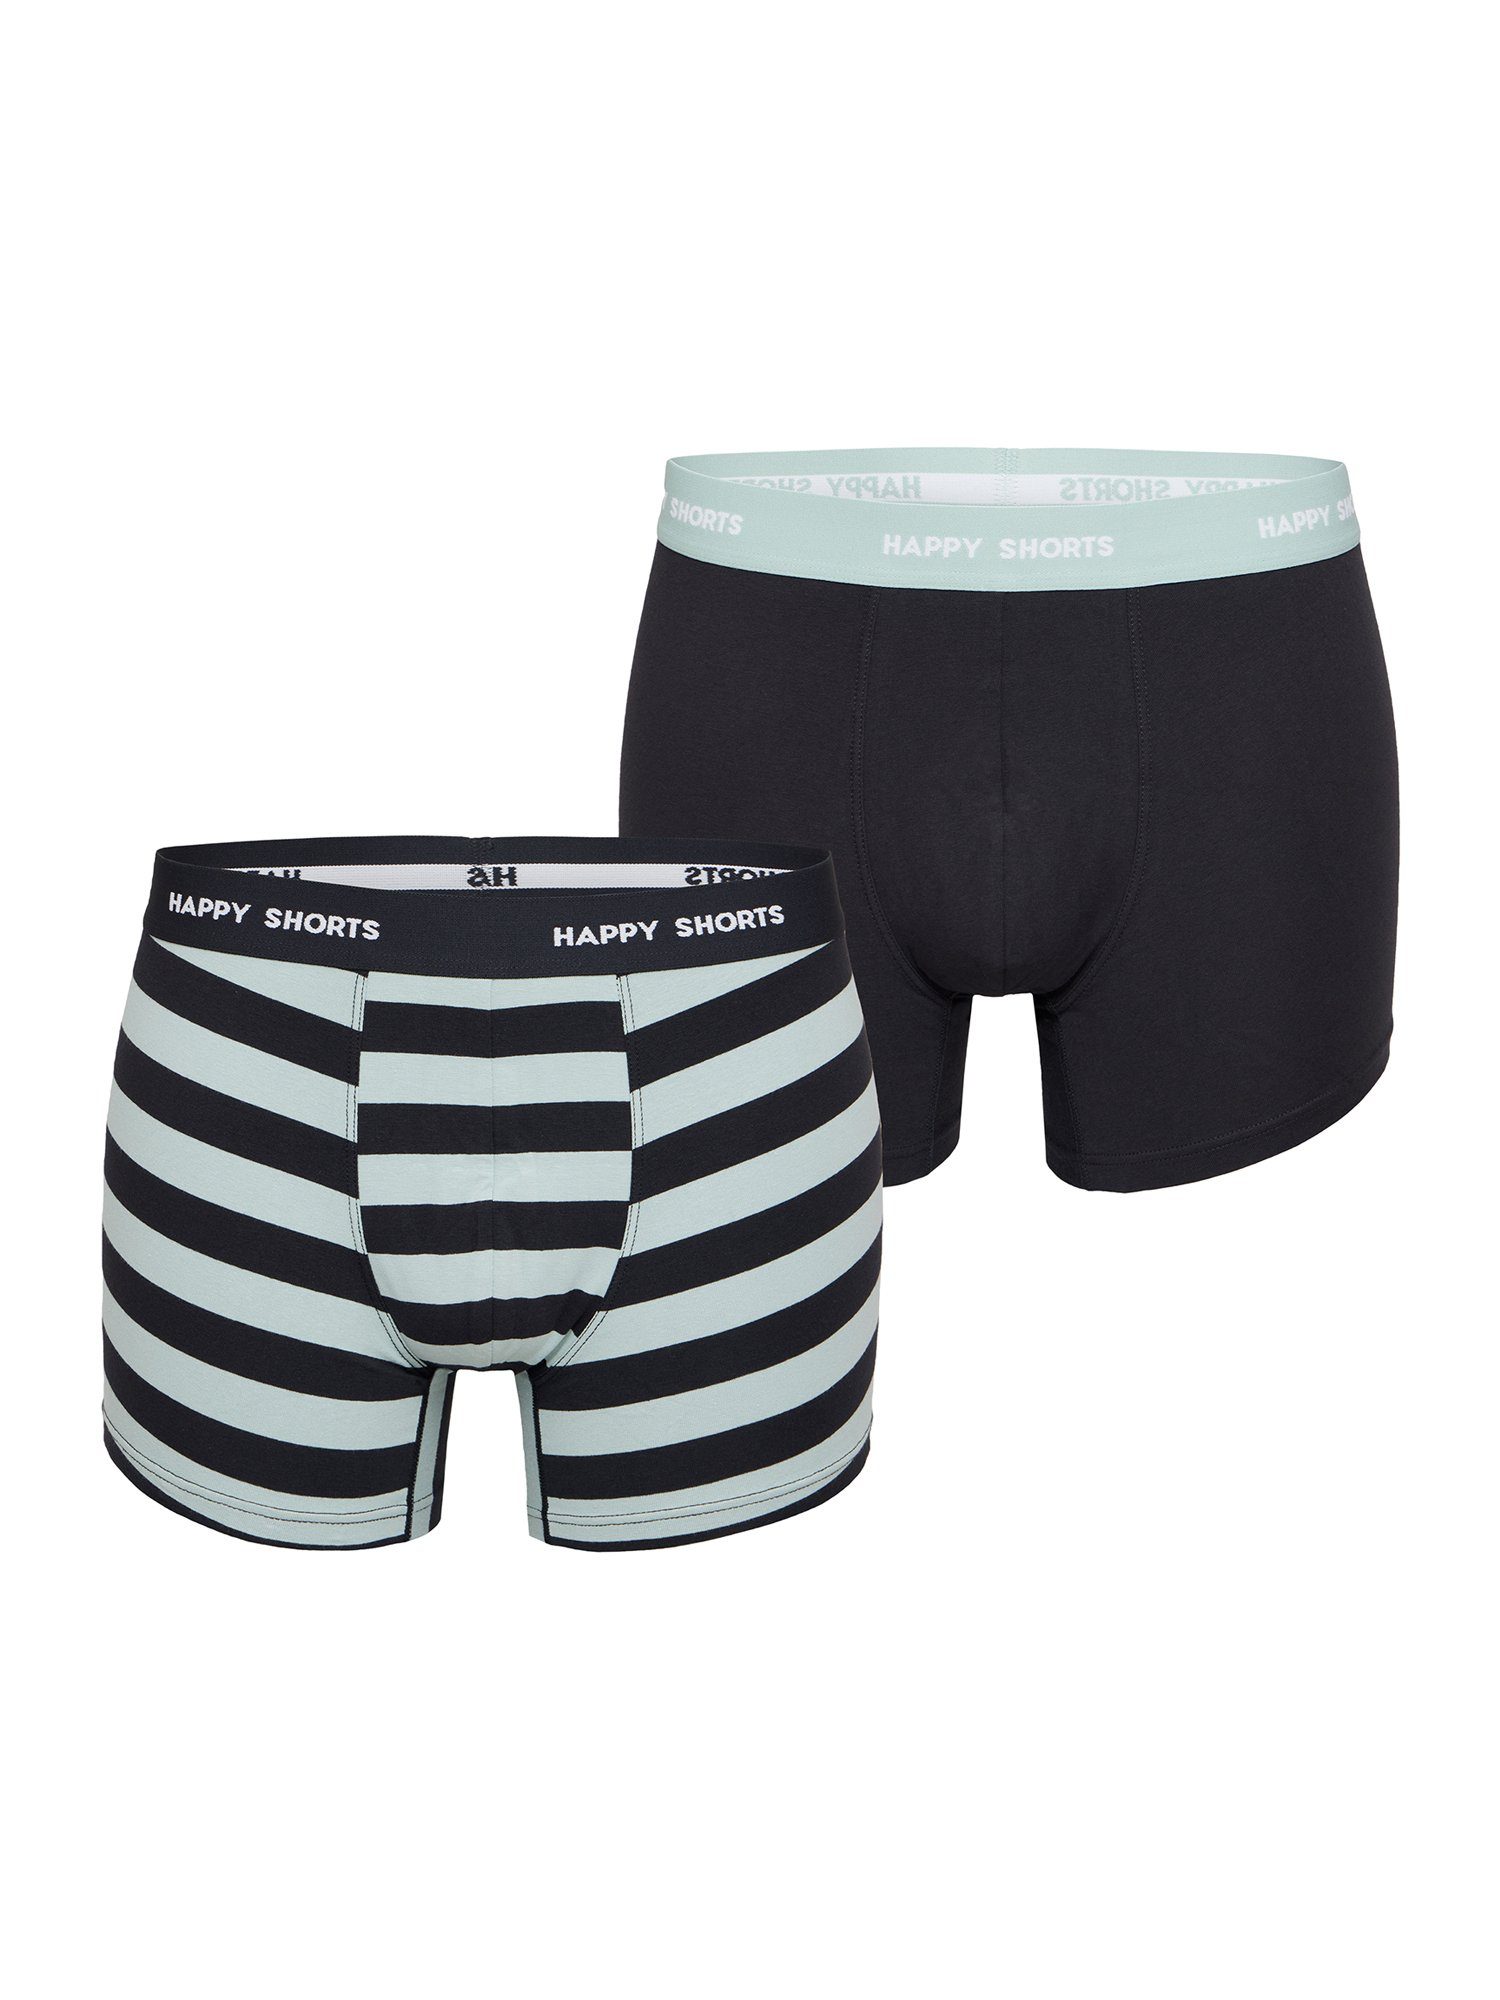 HAPPY SHORTS Retro Pants Trunks (2-St) Retro-Boxer Retro-shorts unterhose Dusty Mint Blockstripe